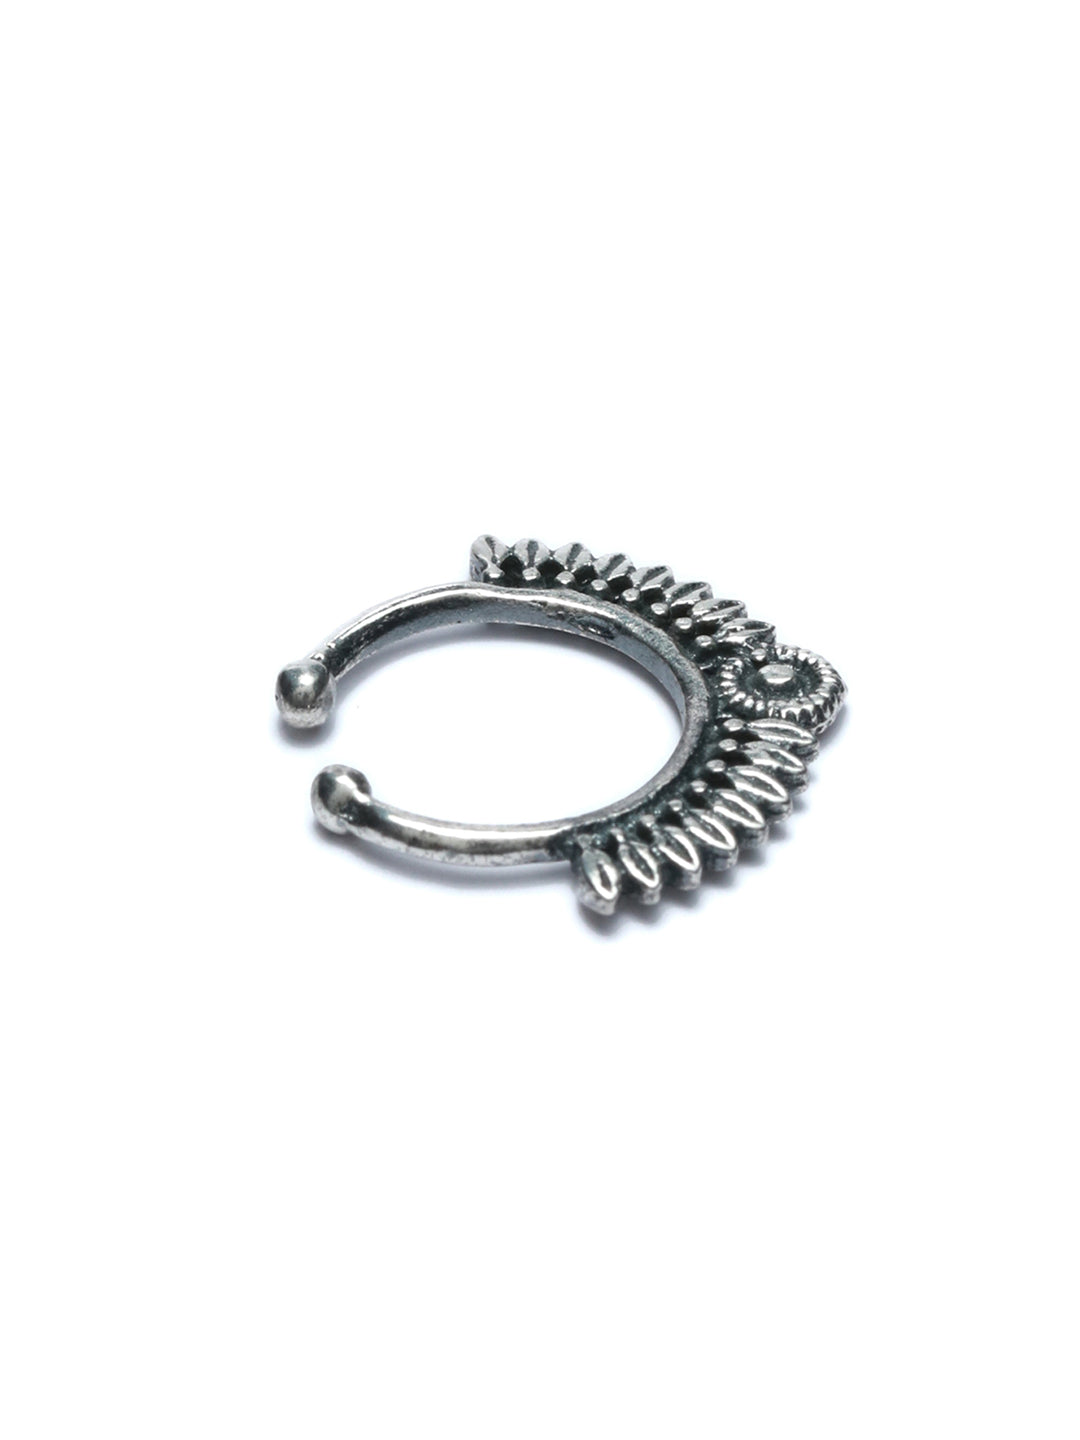 Buy Nose Ring No Piercing, Fake Nose Ring, Nose Ring Silver, Fake Clip on Nose  Ring, Silver Hugger Nose Ring, Diamonds Nose Ring Gold Filled Online in  India - Etsy